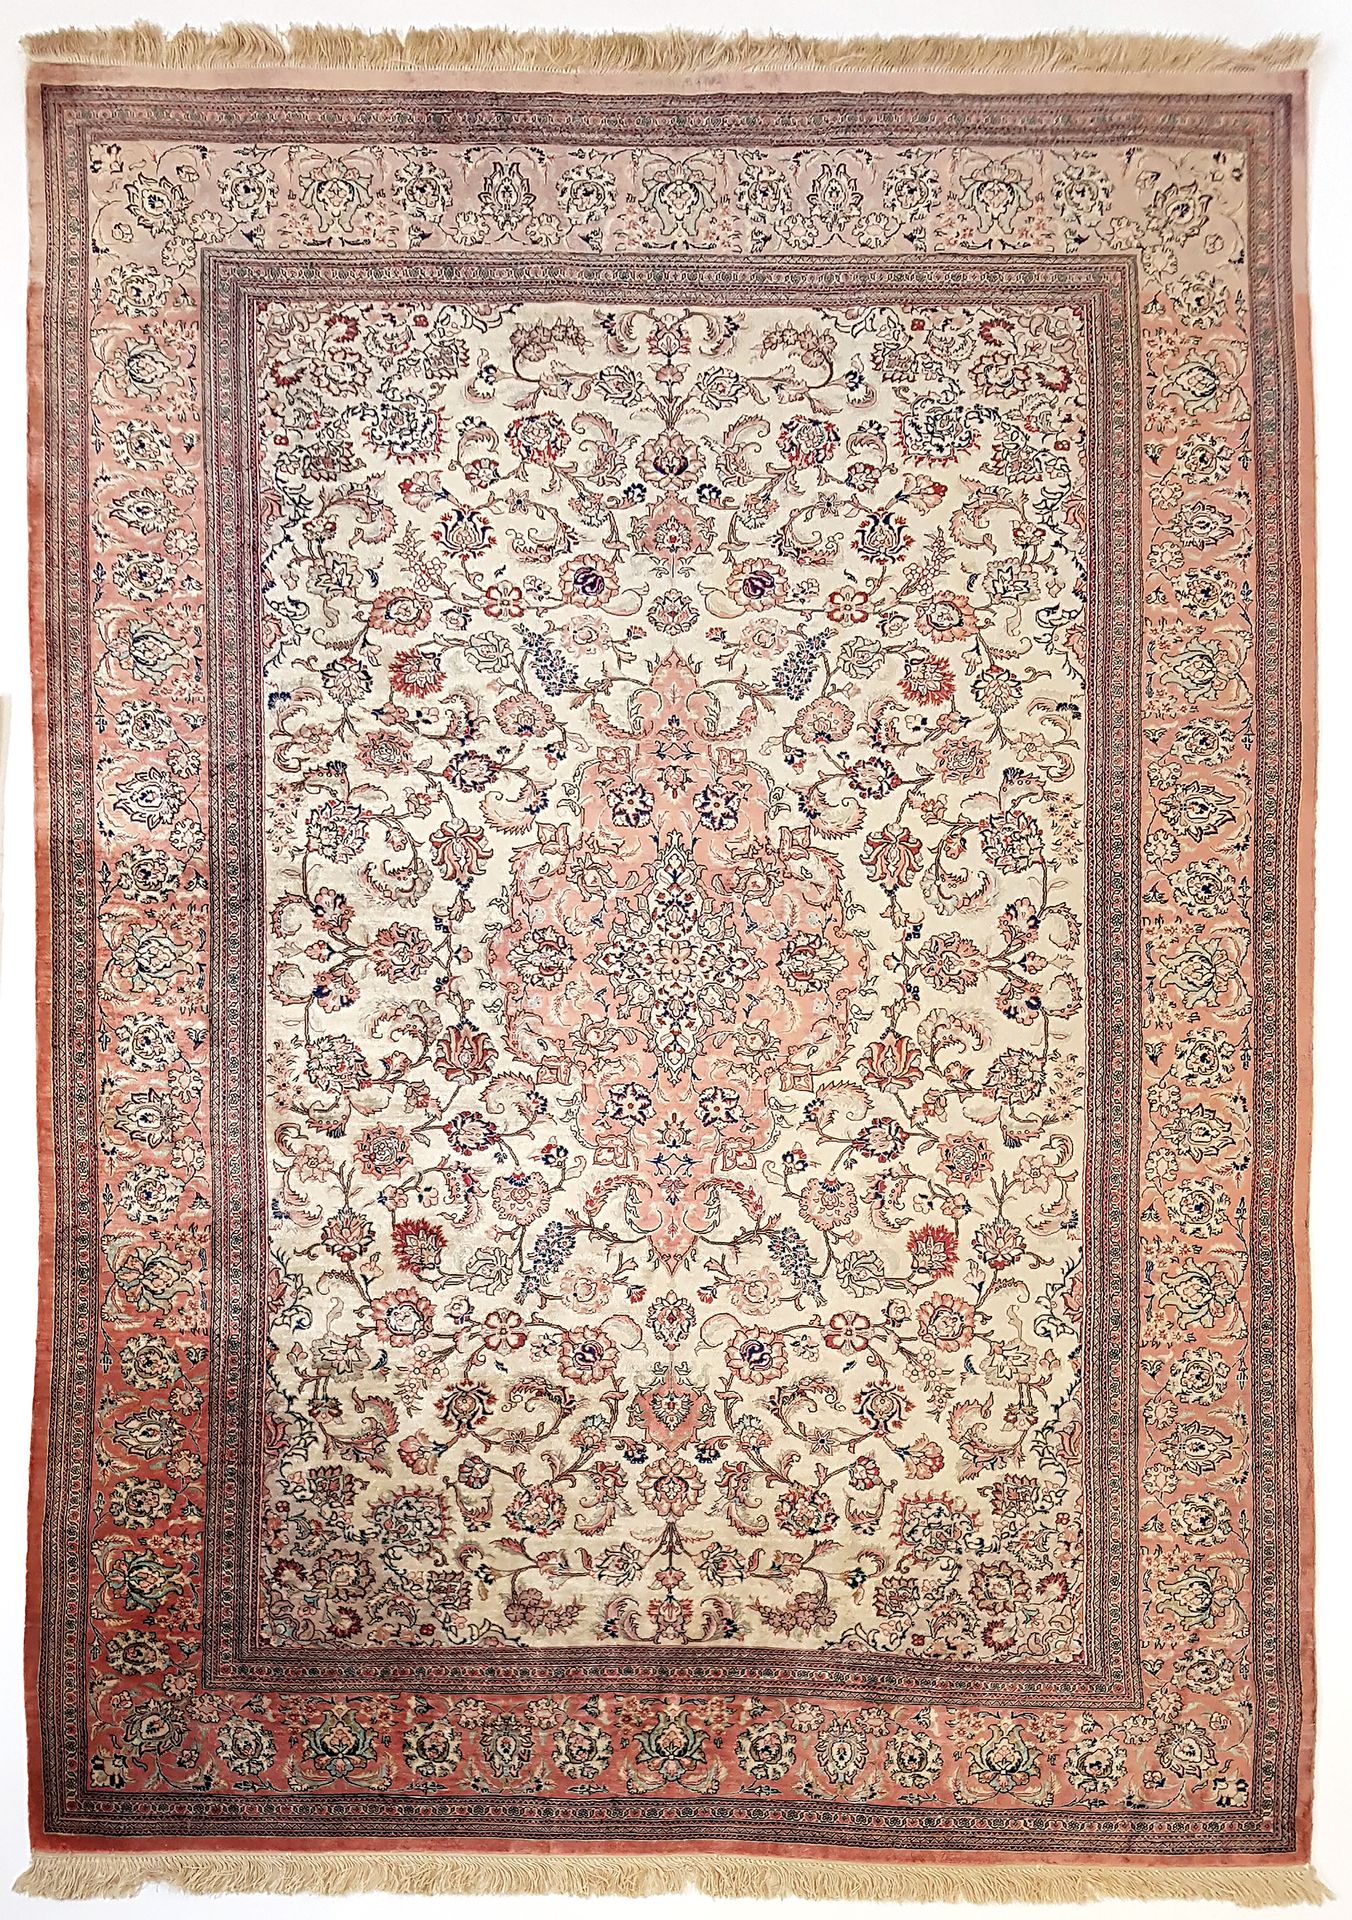 Null 精美的Ghoum丝毯（伊朗），约1980年

尺寸：196 x 138 cm

技术特征：丝绒，丝质衬底

密度：每平方米约11000/12000节
&hellip;